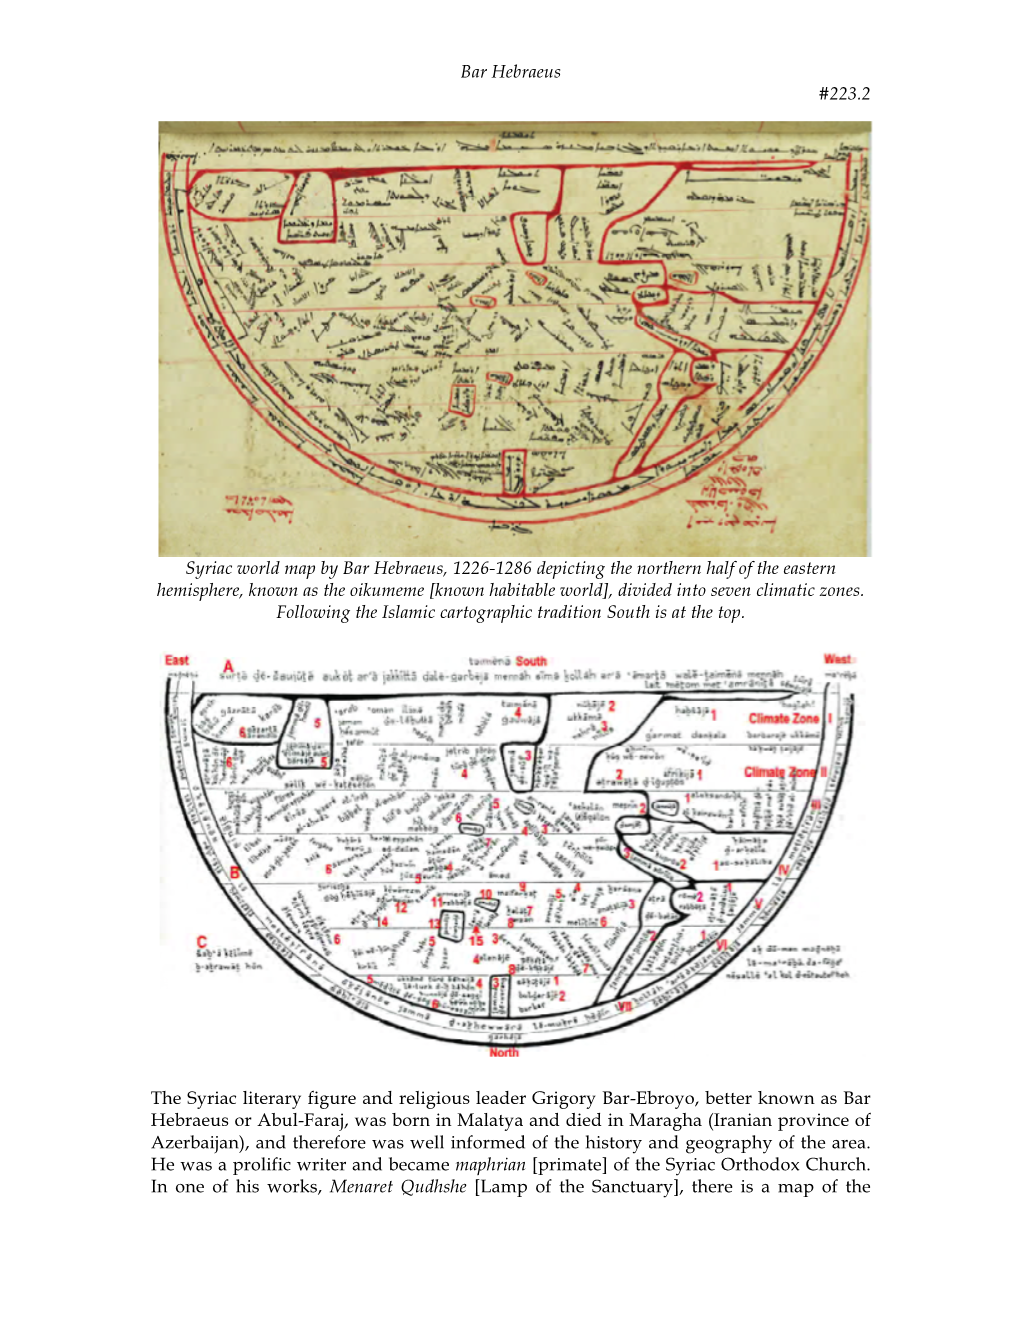 Bar Hebraeus #223.2 Syriac World Map by Bar Hebraeus, 1226-1286 Depicting the Northern Half of the Eastern Hemisphere, Known As